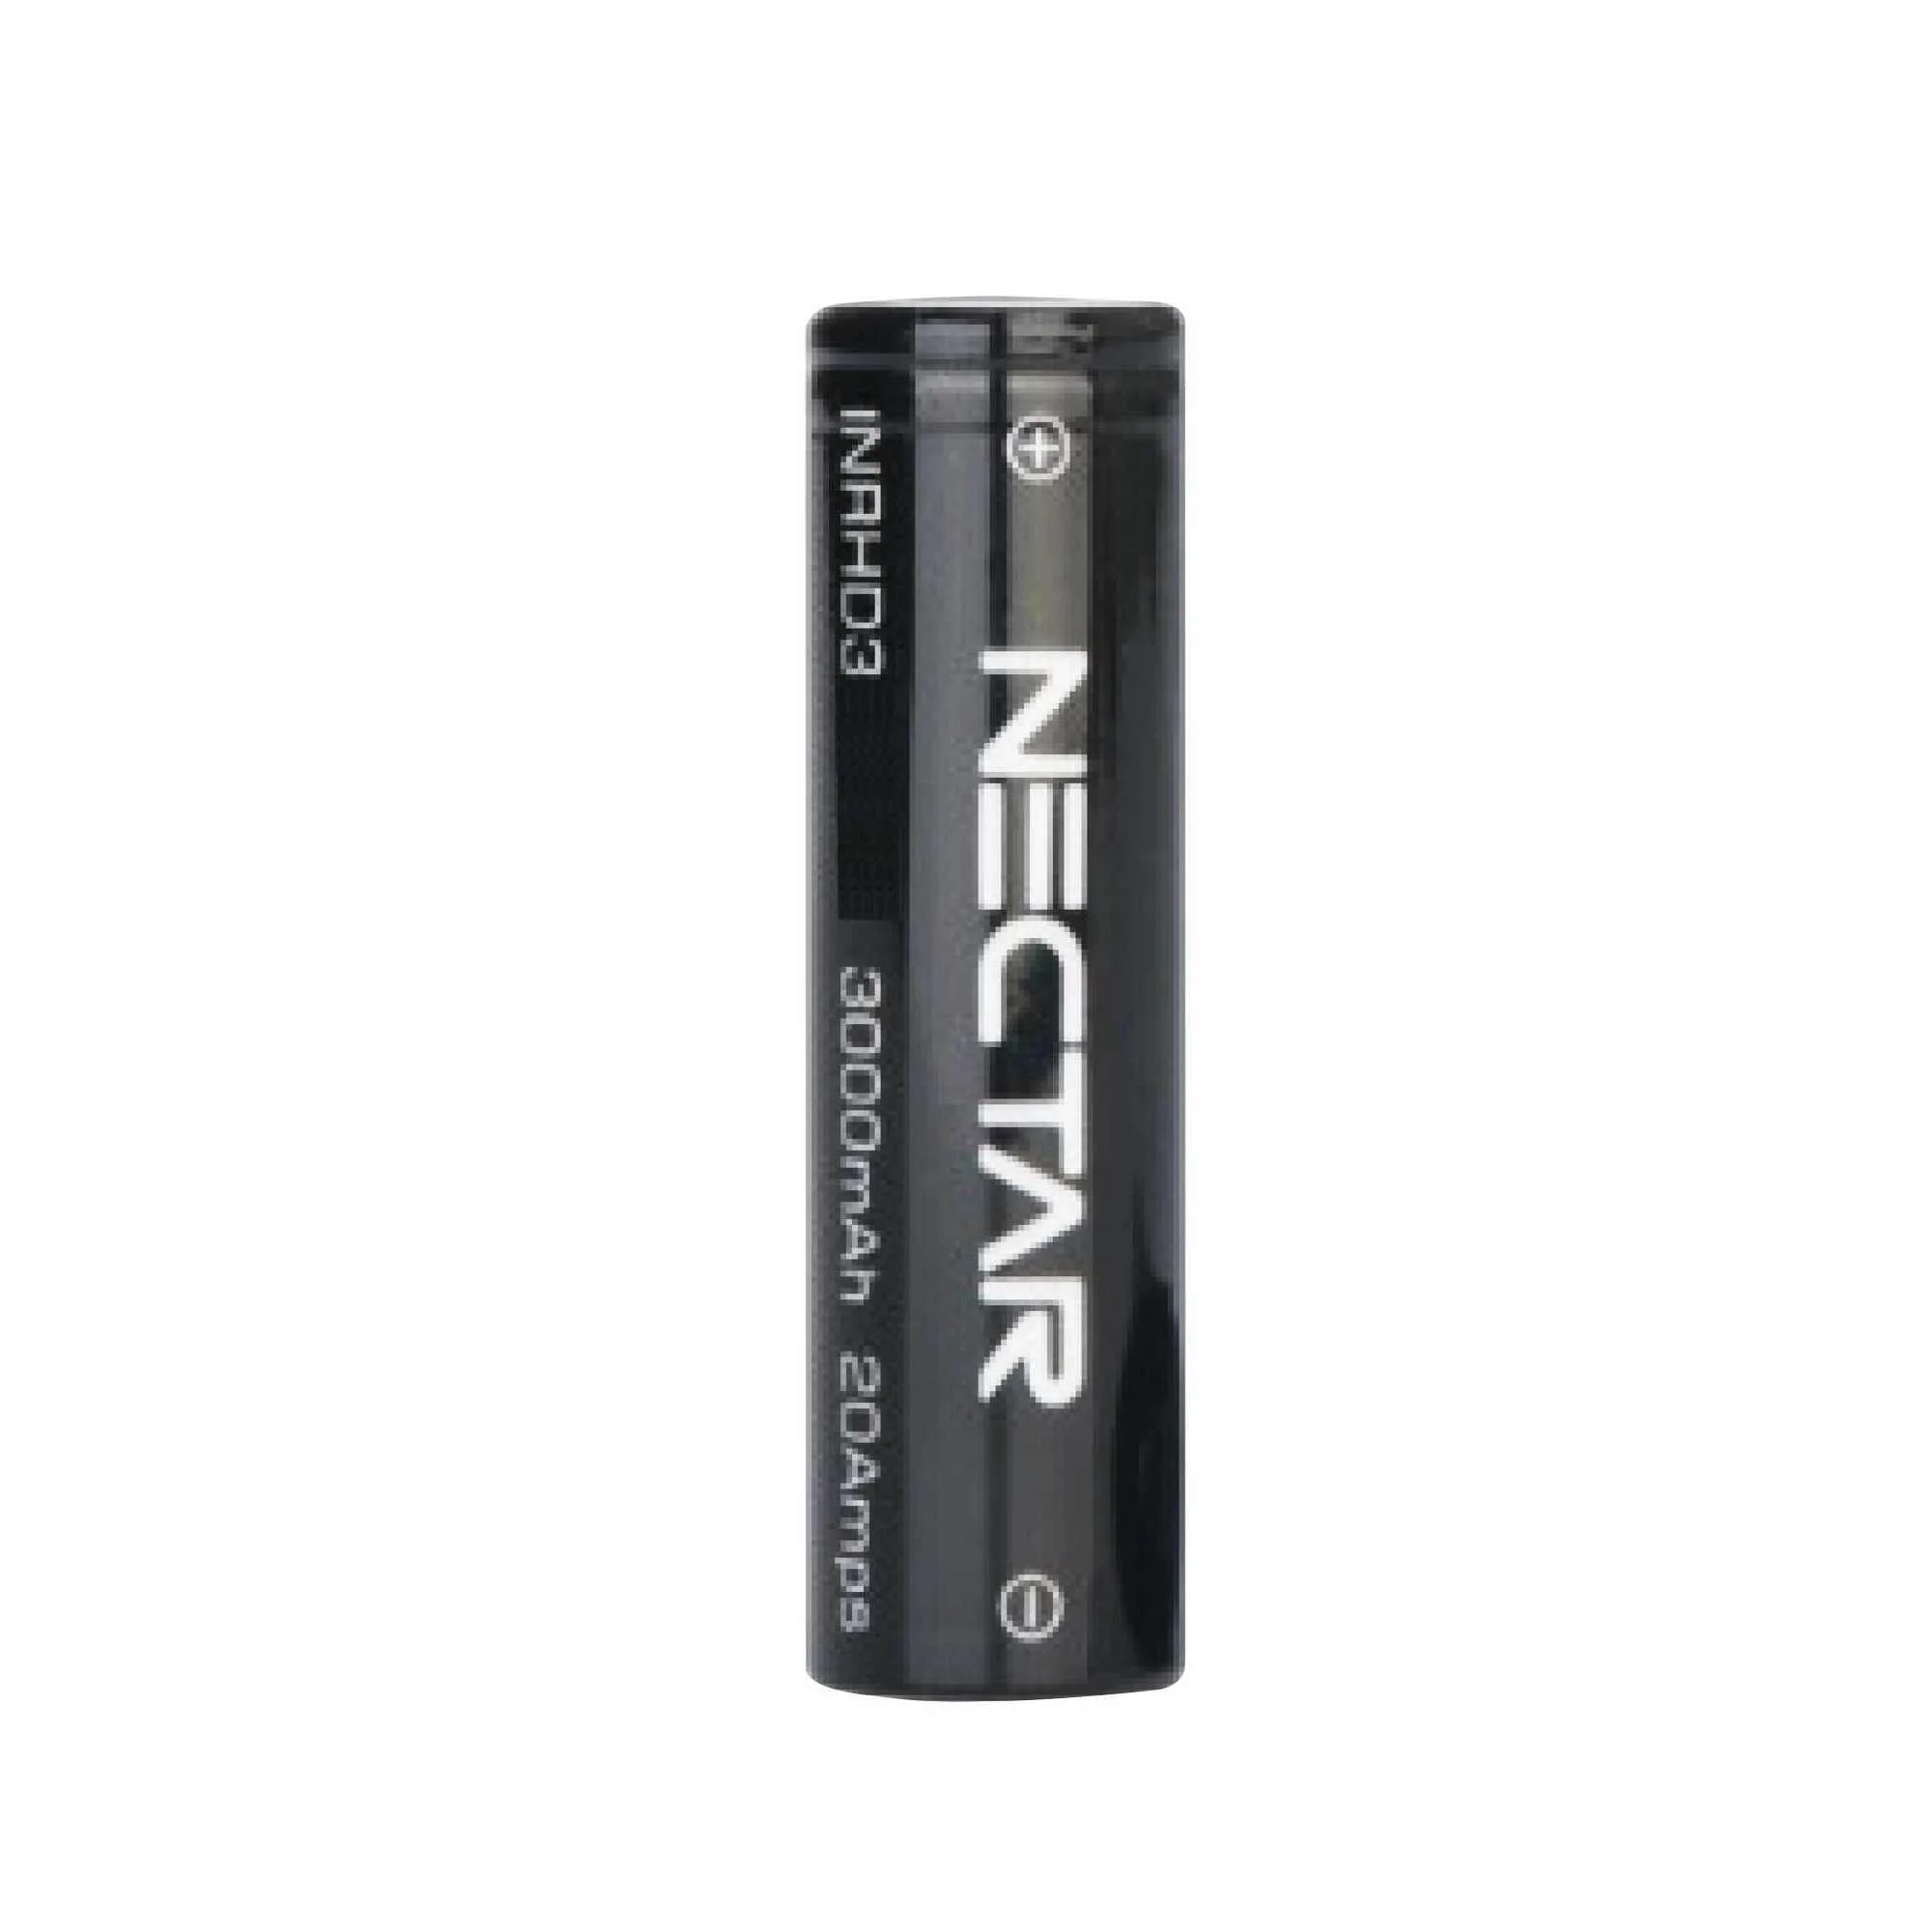 Nectar HD3 18650 Battery 3000mah (Pack of 1)